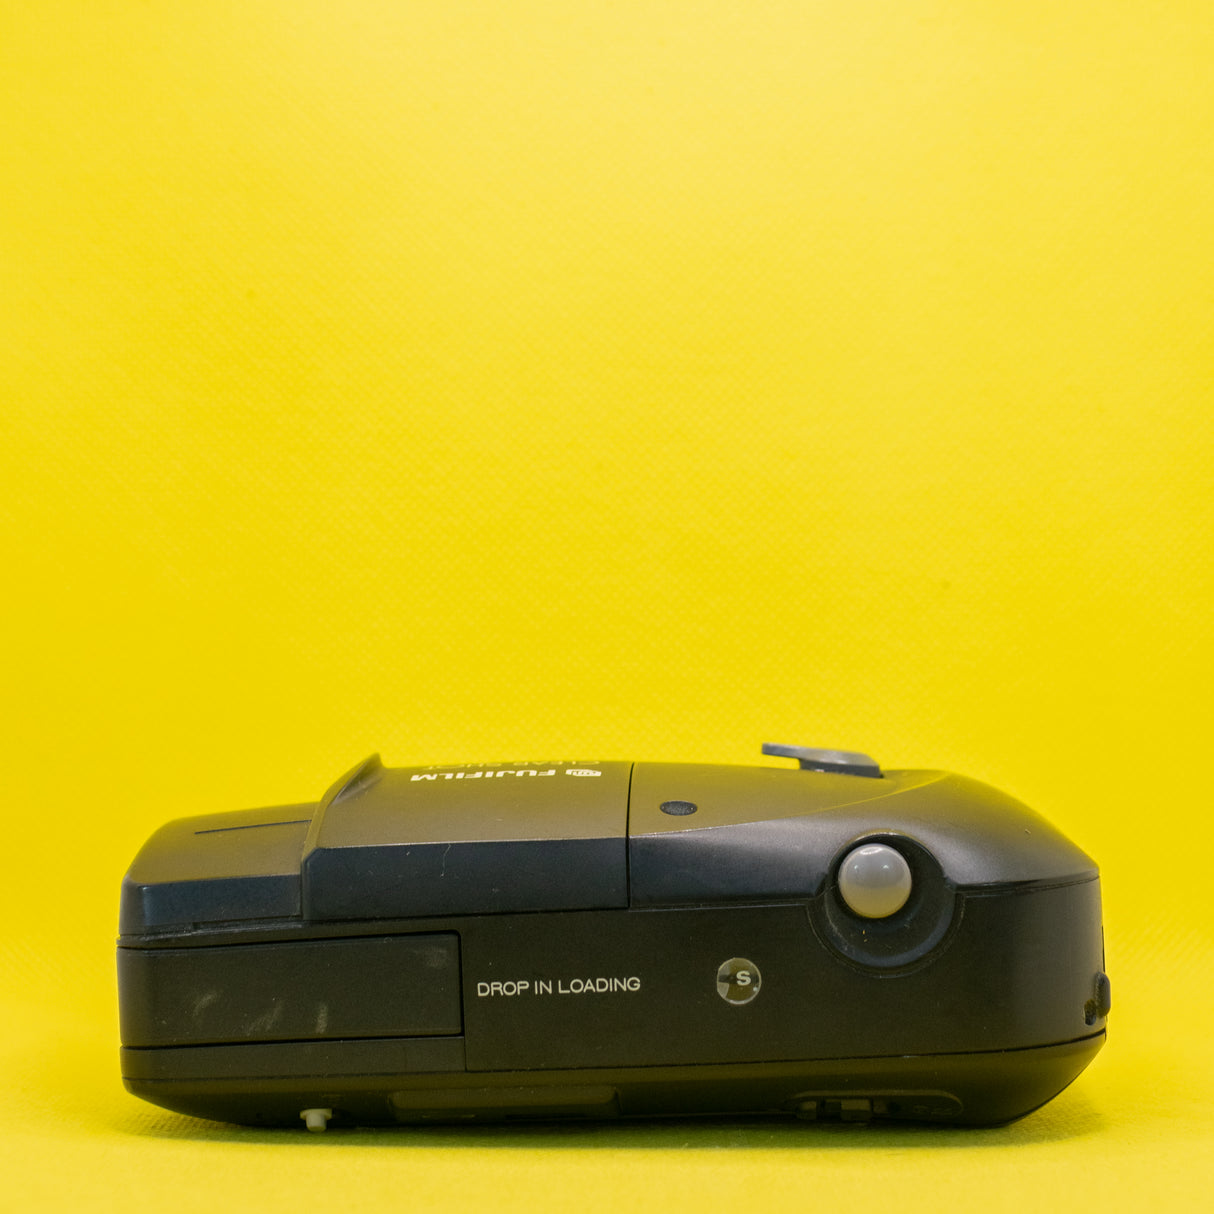 FujiFilm Clearshot Super - 35mm Compact Film Camera